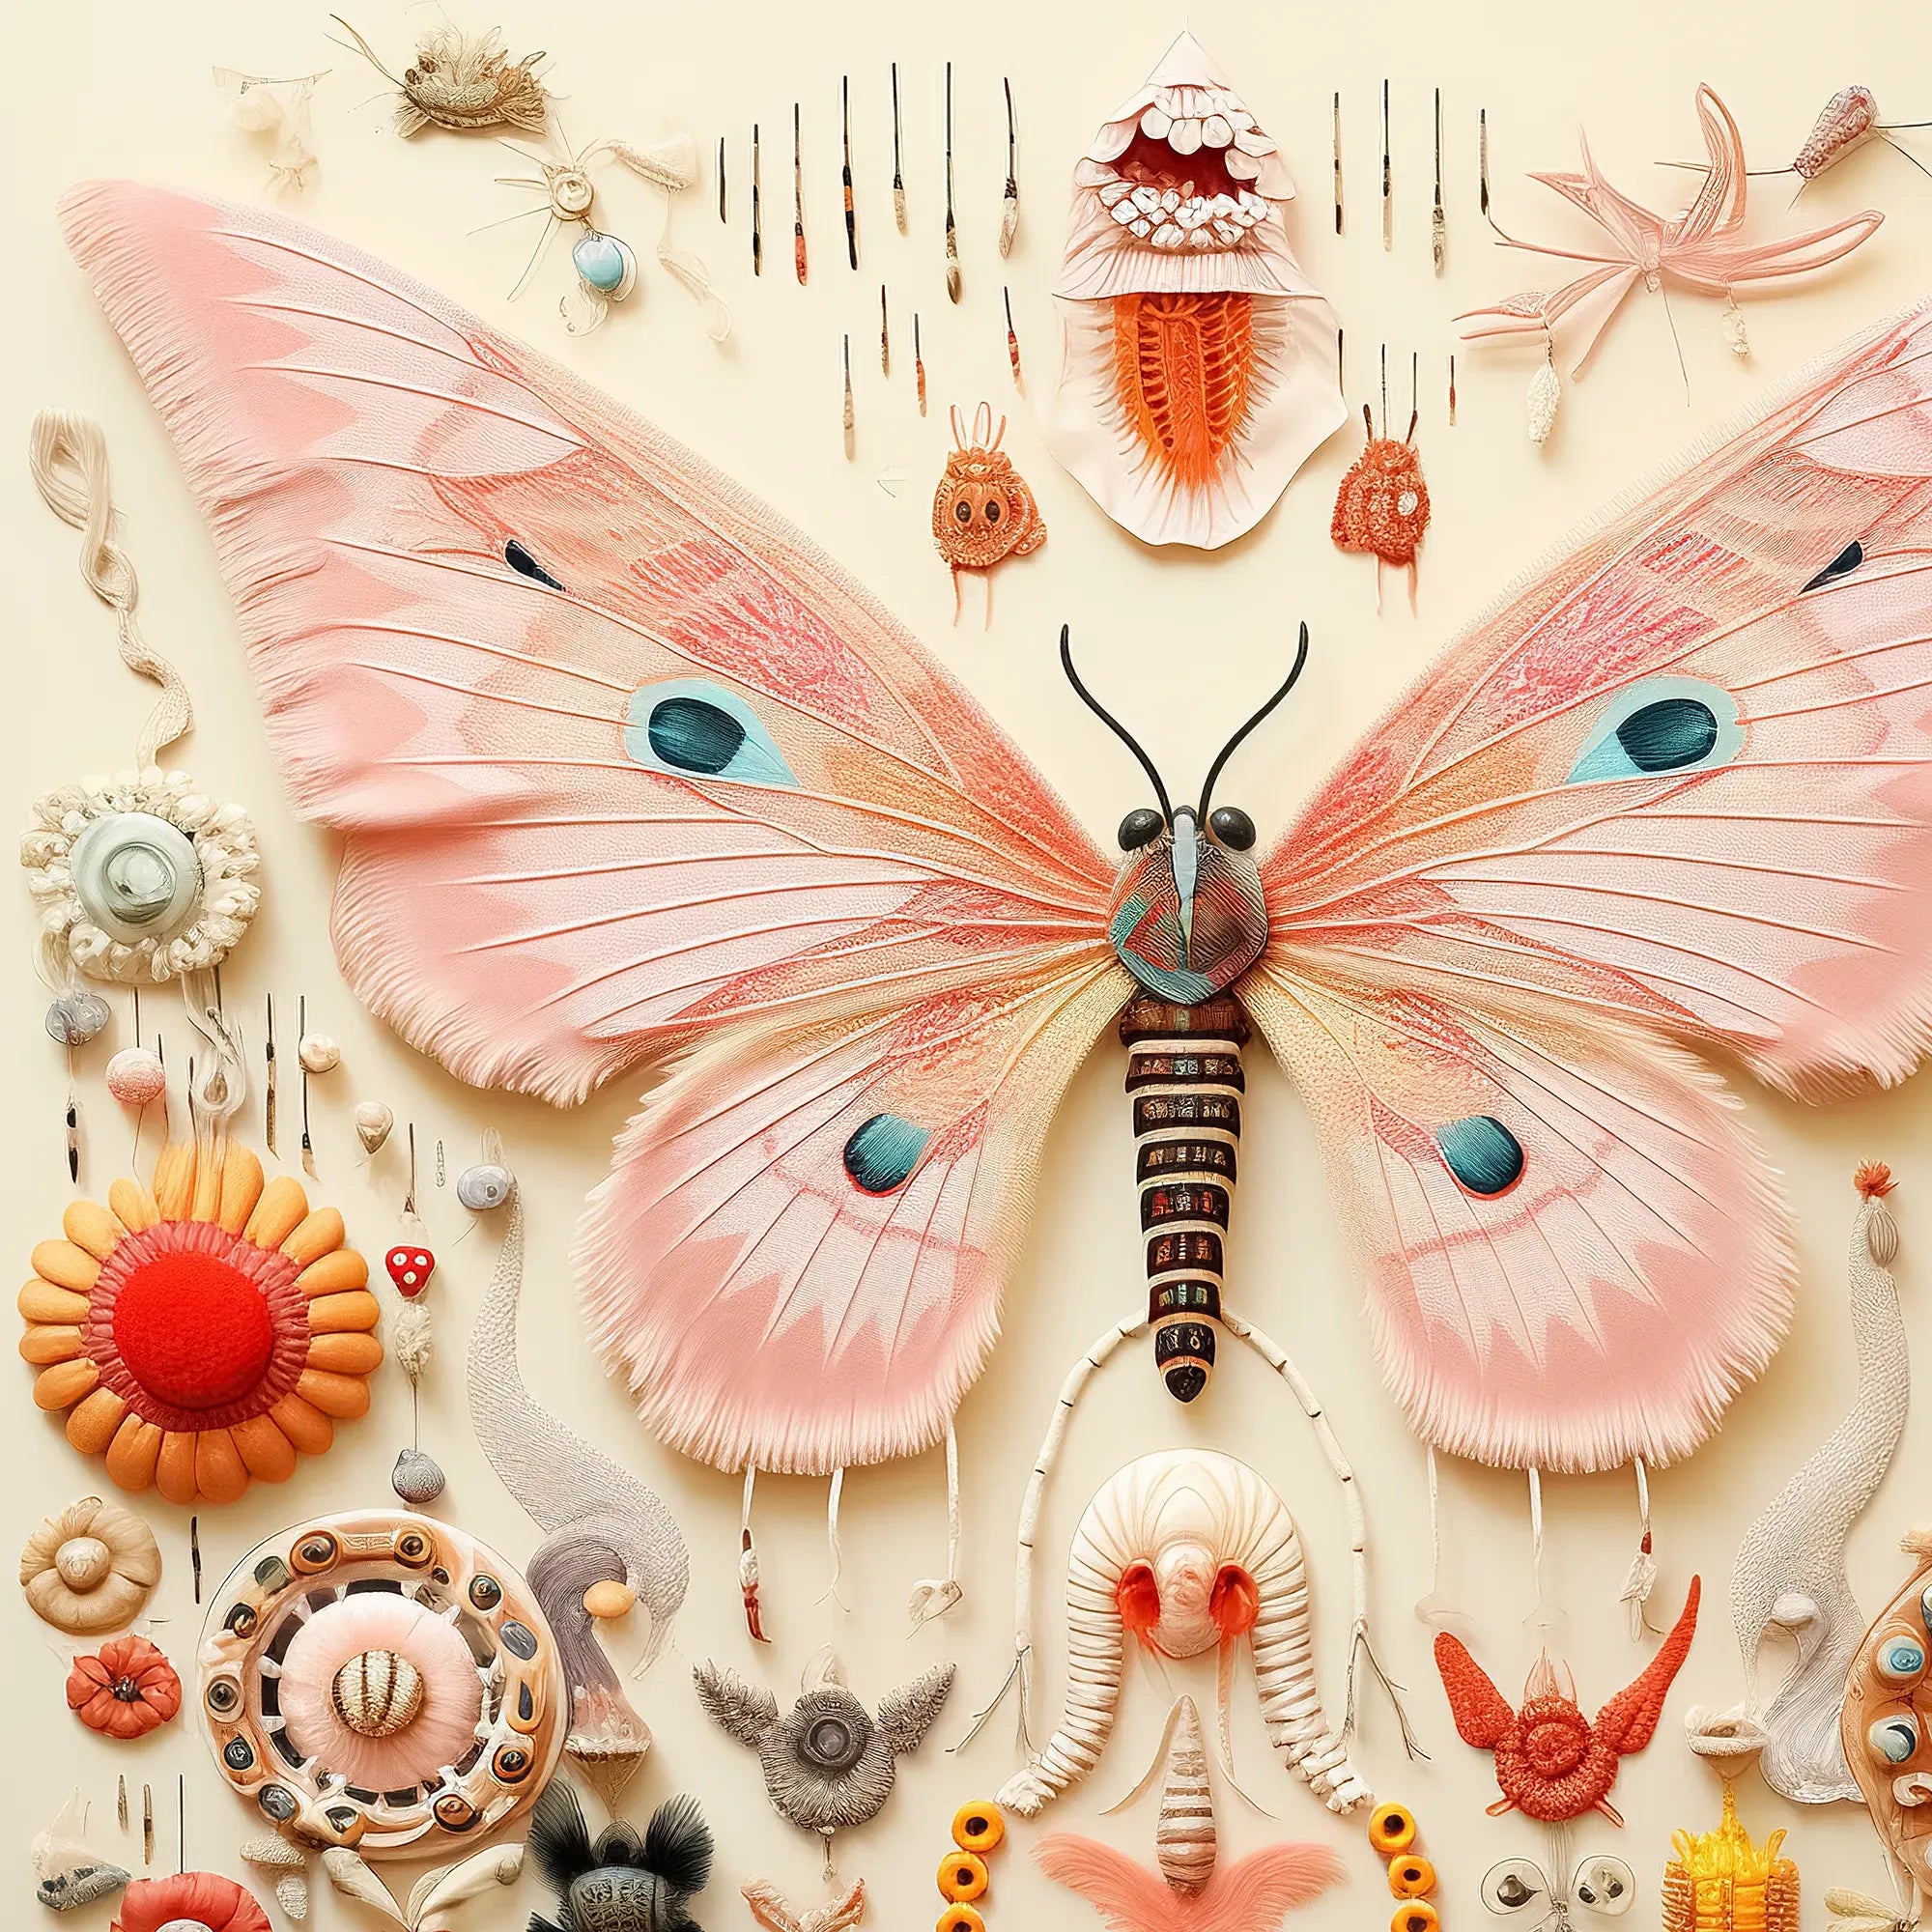 Spreadwinged Empress - Alien Species Taxonomy Art Print - Posters Prints & Visual Artwork - Aesthetic Art